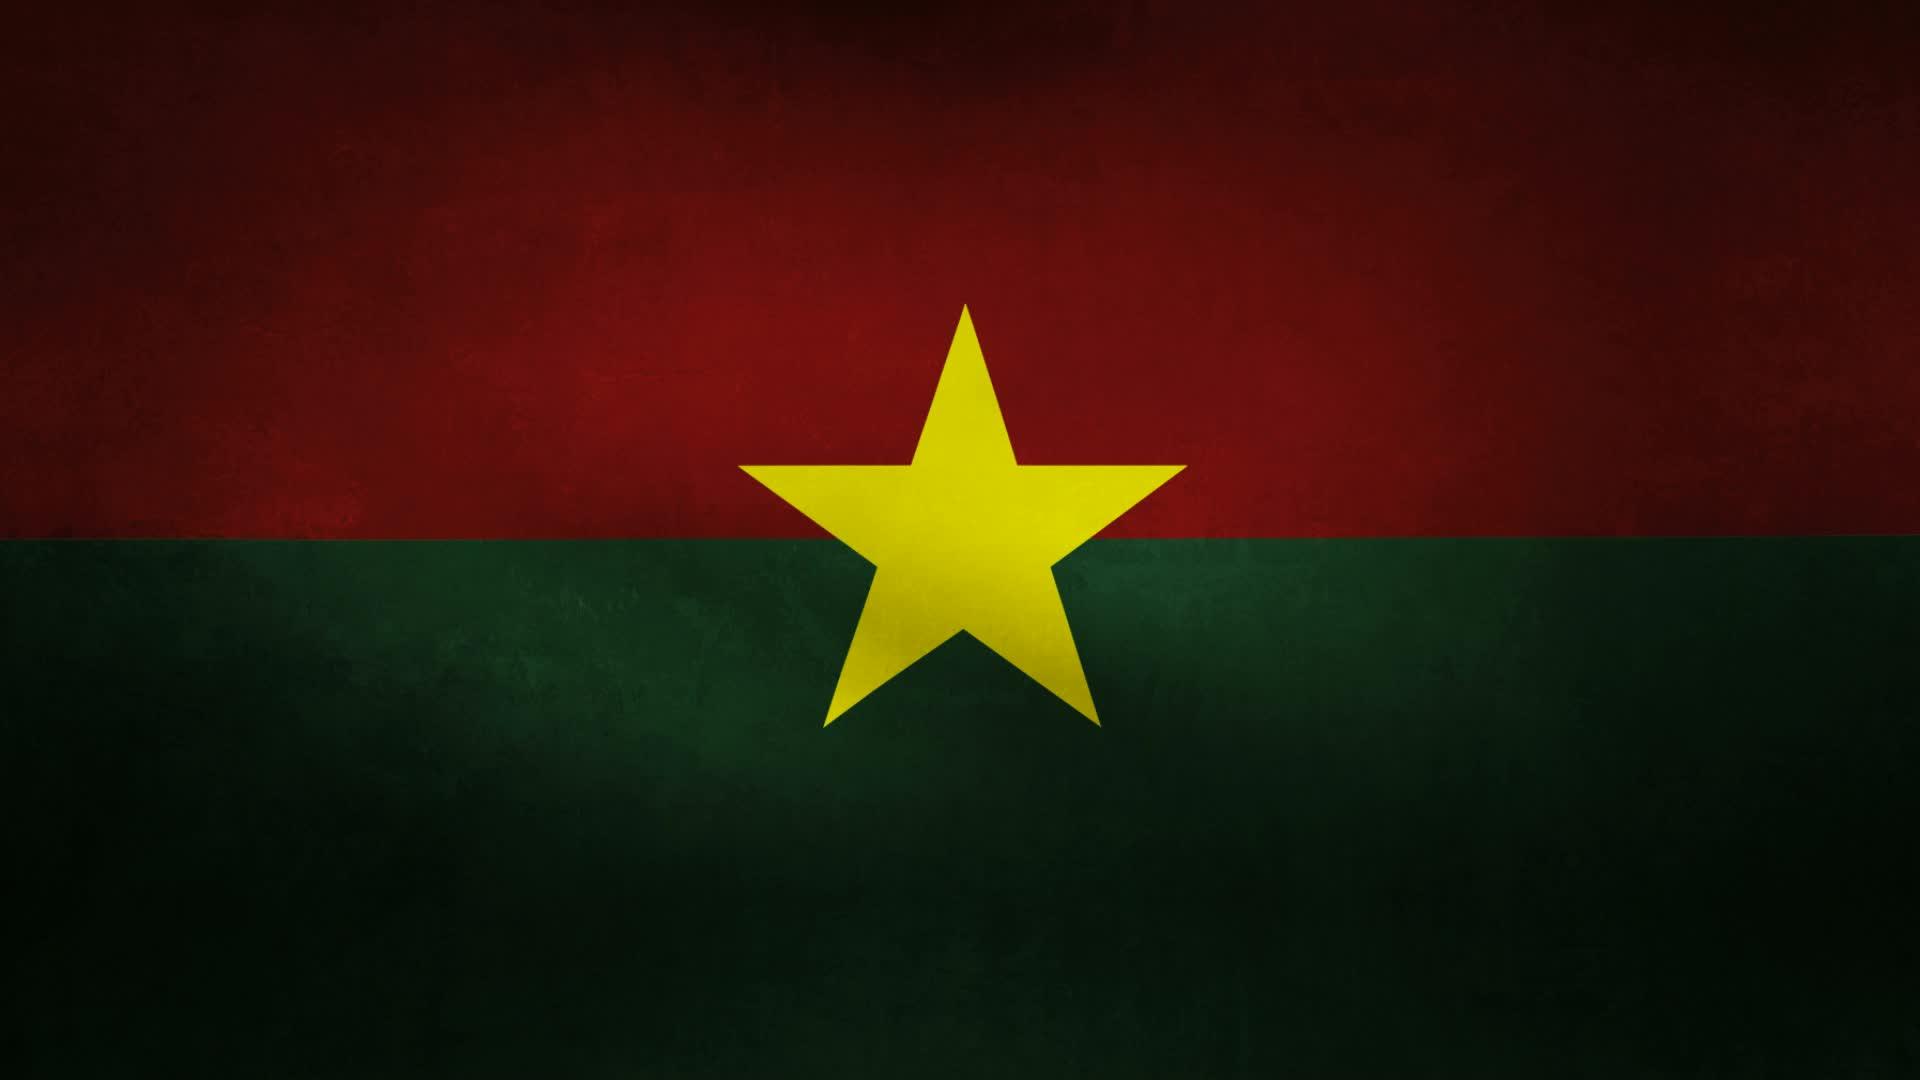 Burkina Faso Flag, High Definition, High Quality, Widescreen